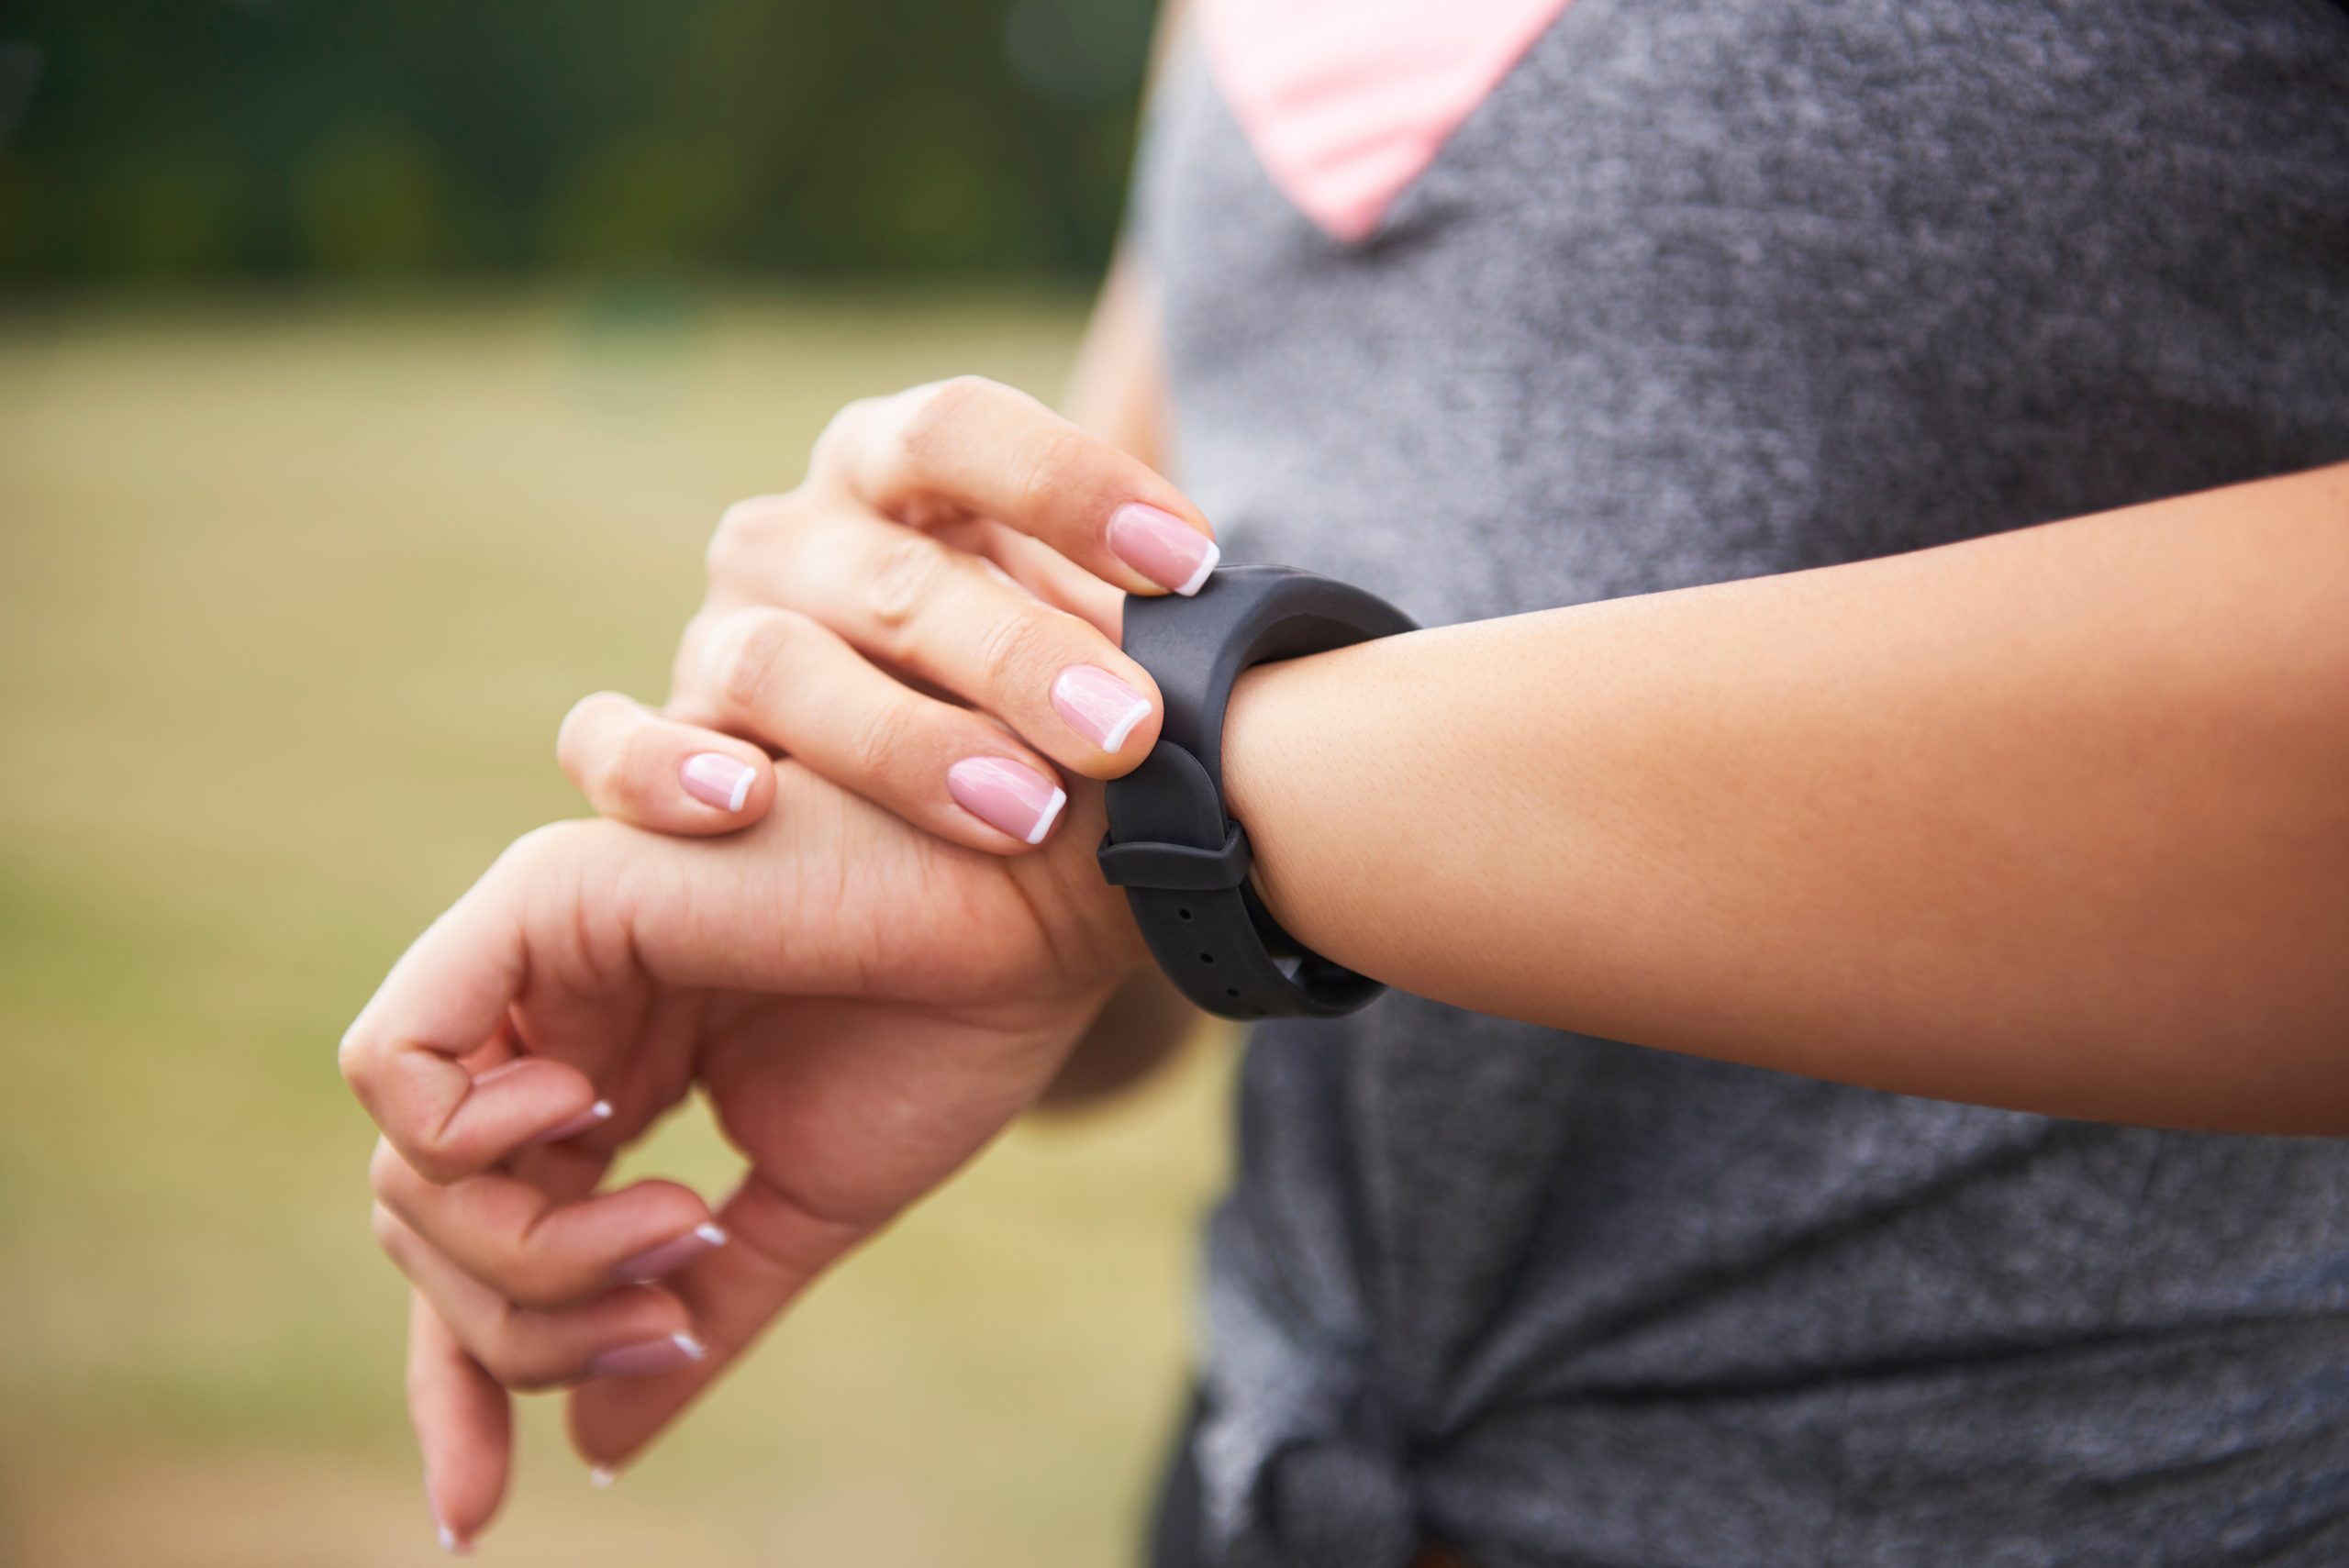 Woman checks Fitbit fitness watch